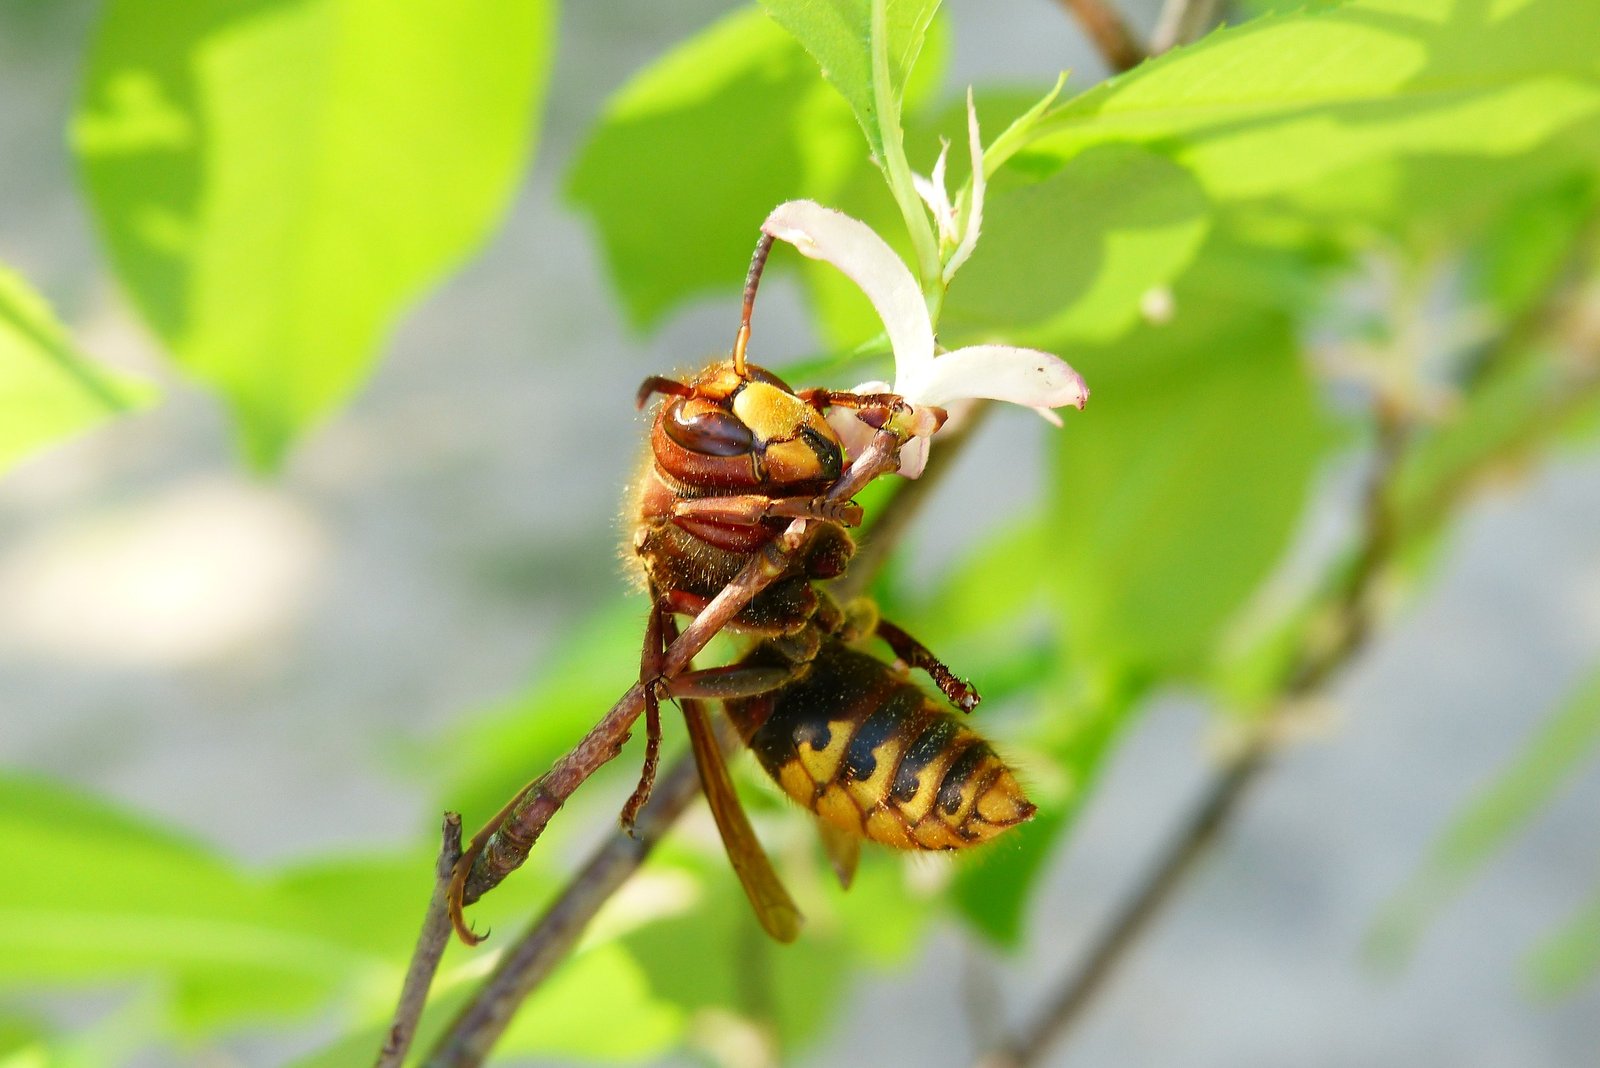 Photograph of European hornet resting on plant